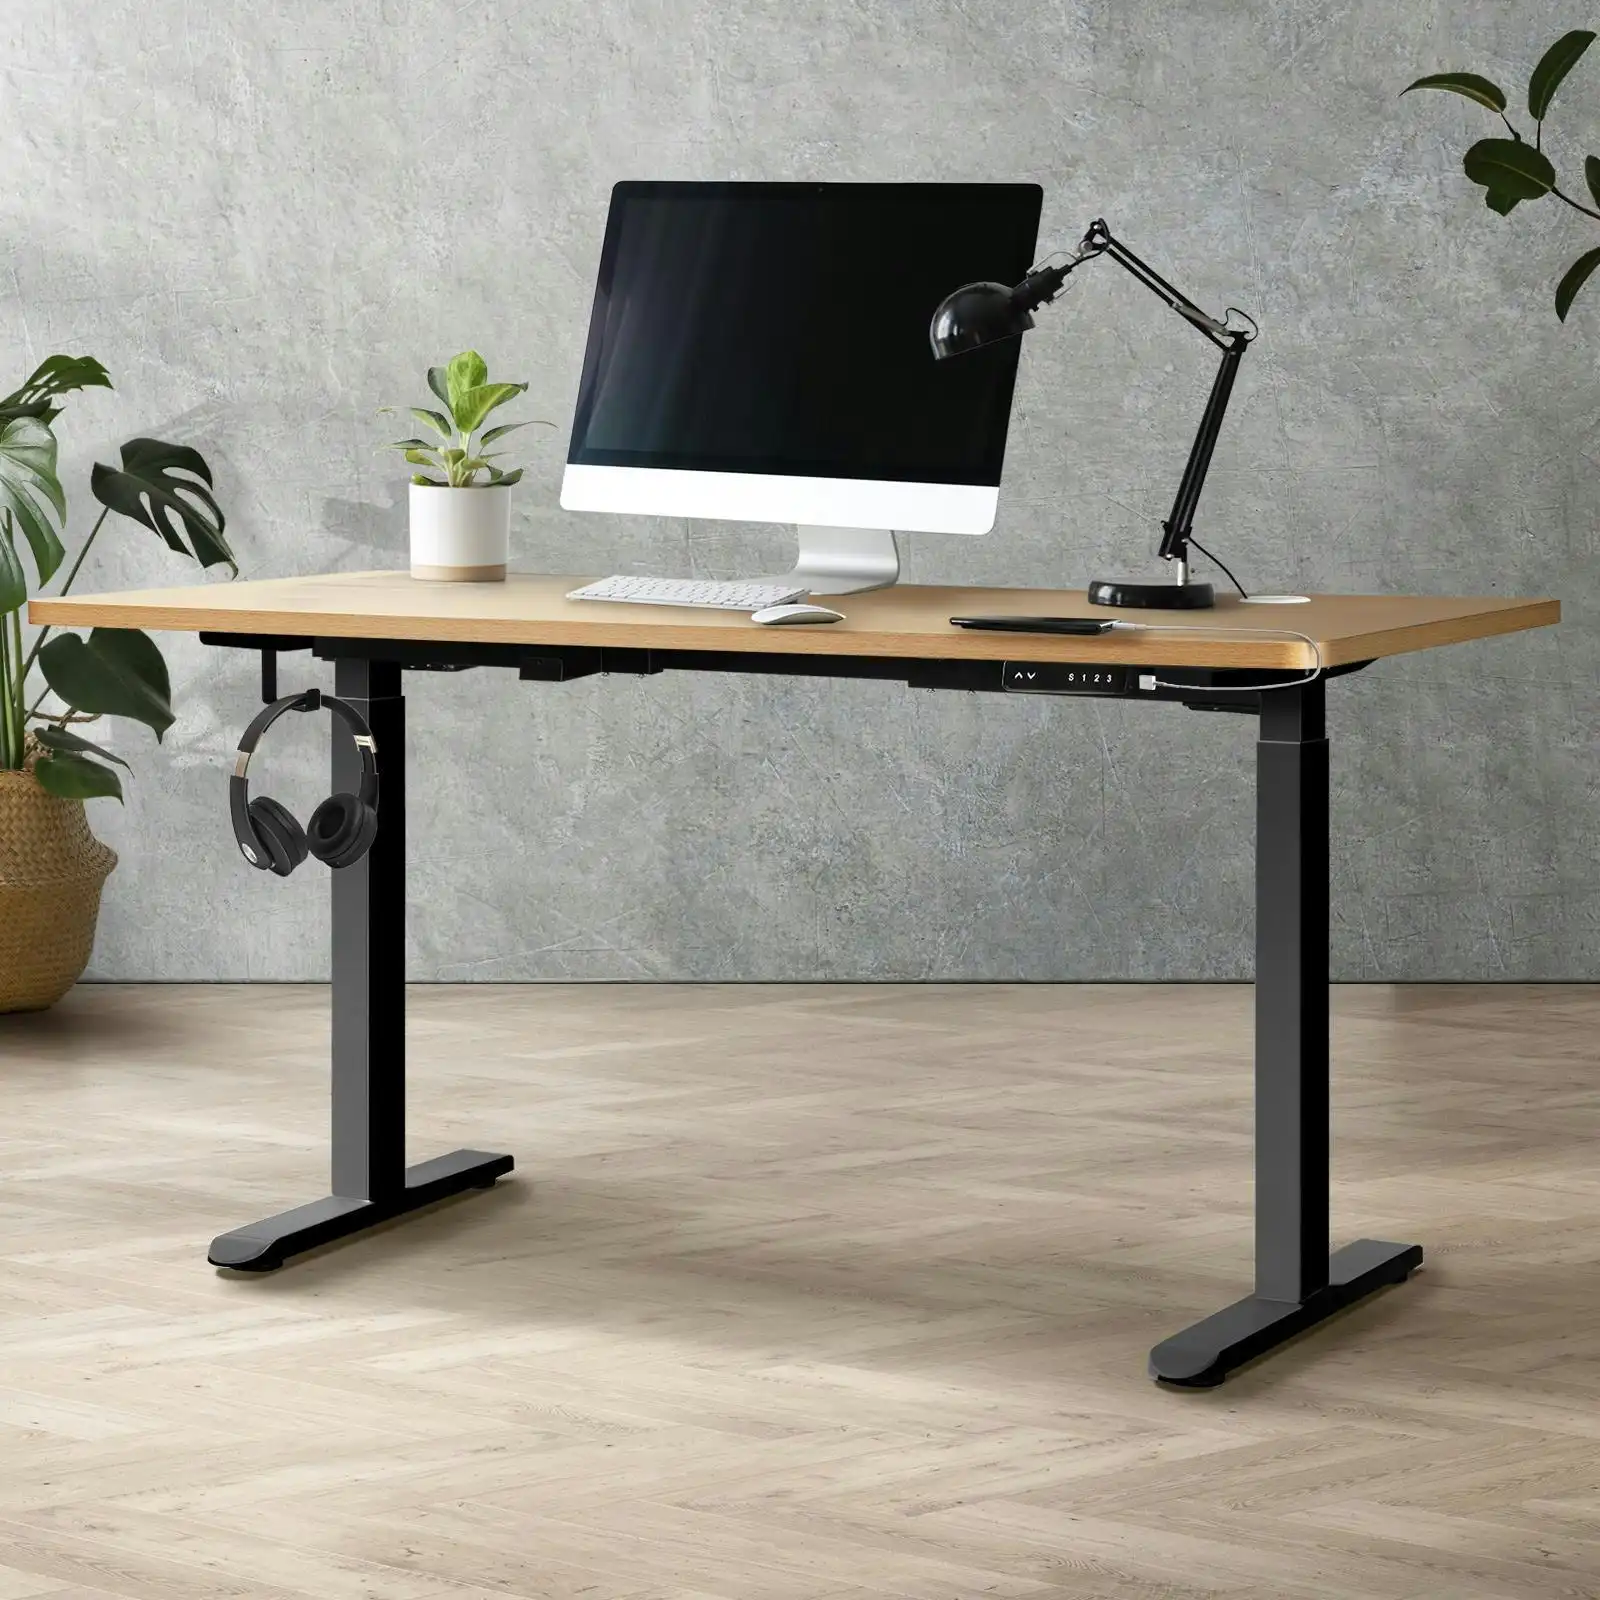 Oikiture 140cm Electric Standing Desk Dual Motor Black Frame OAK Desktop With USB&Type C Port